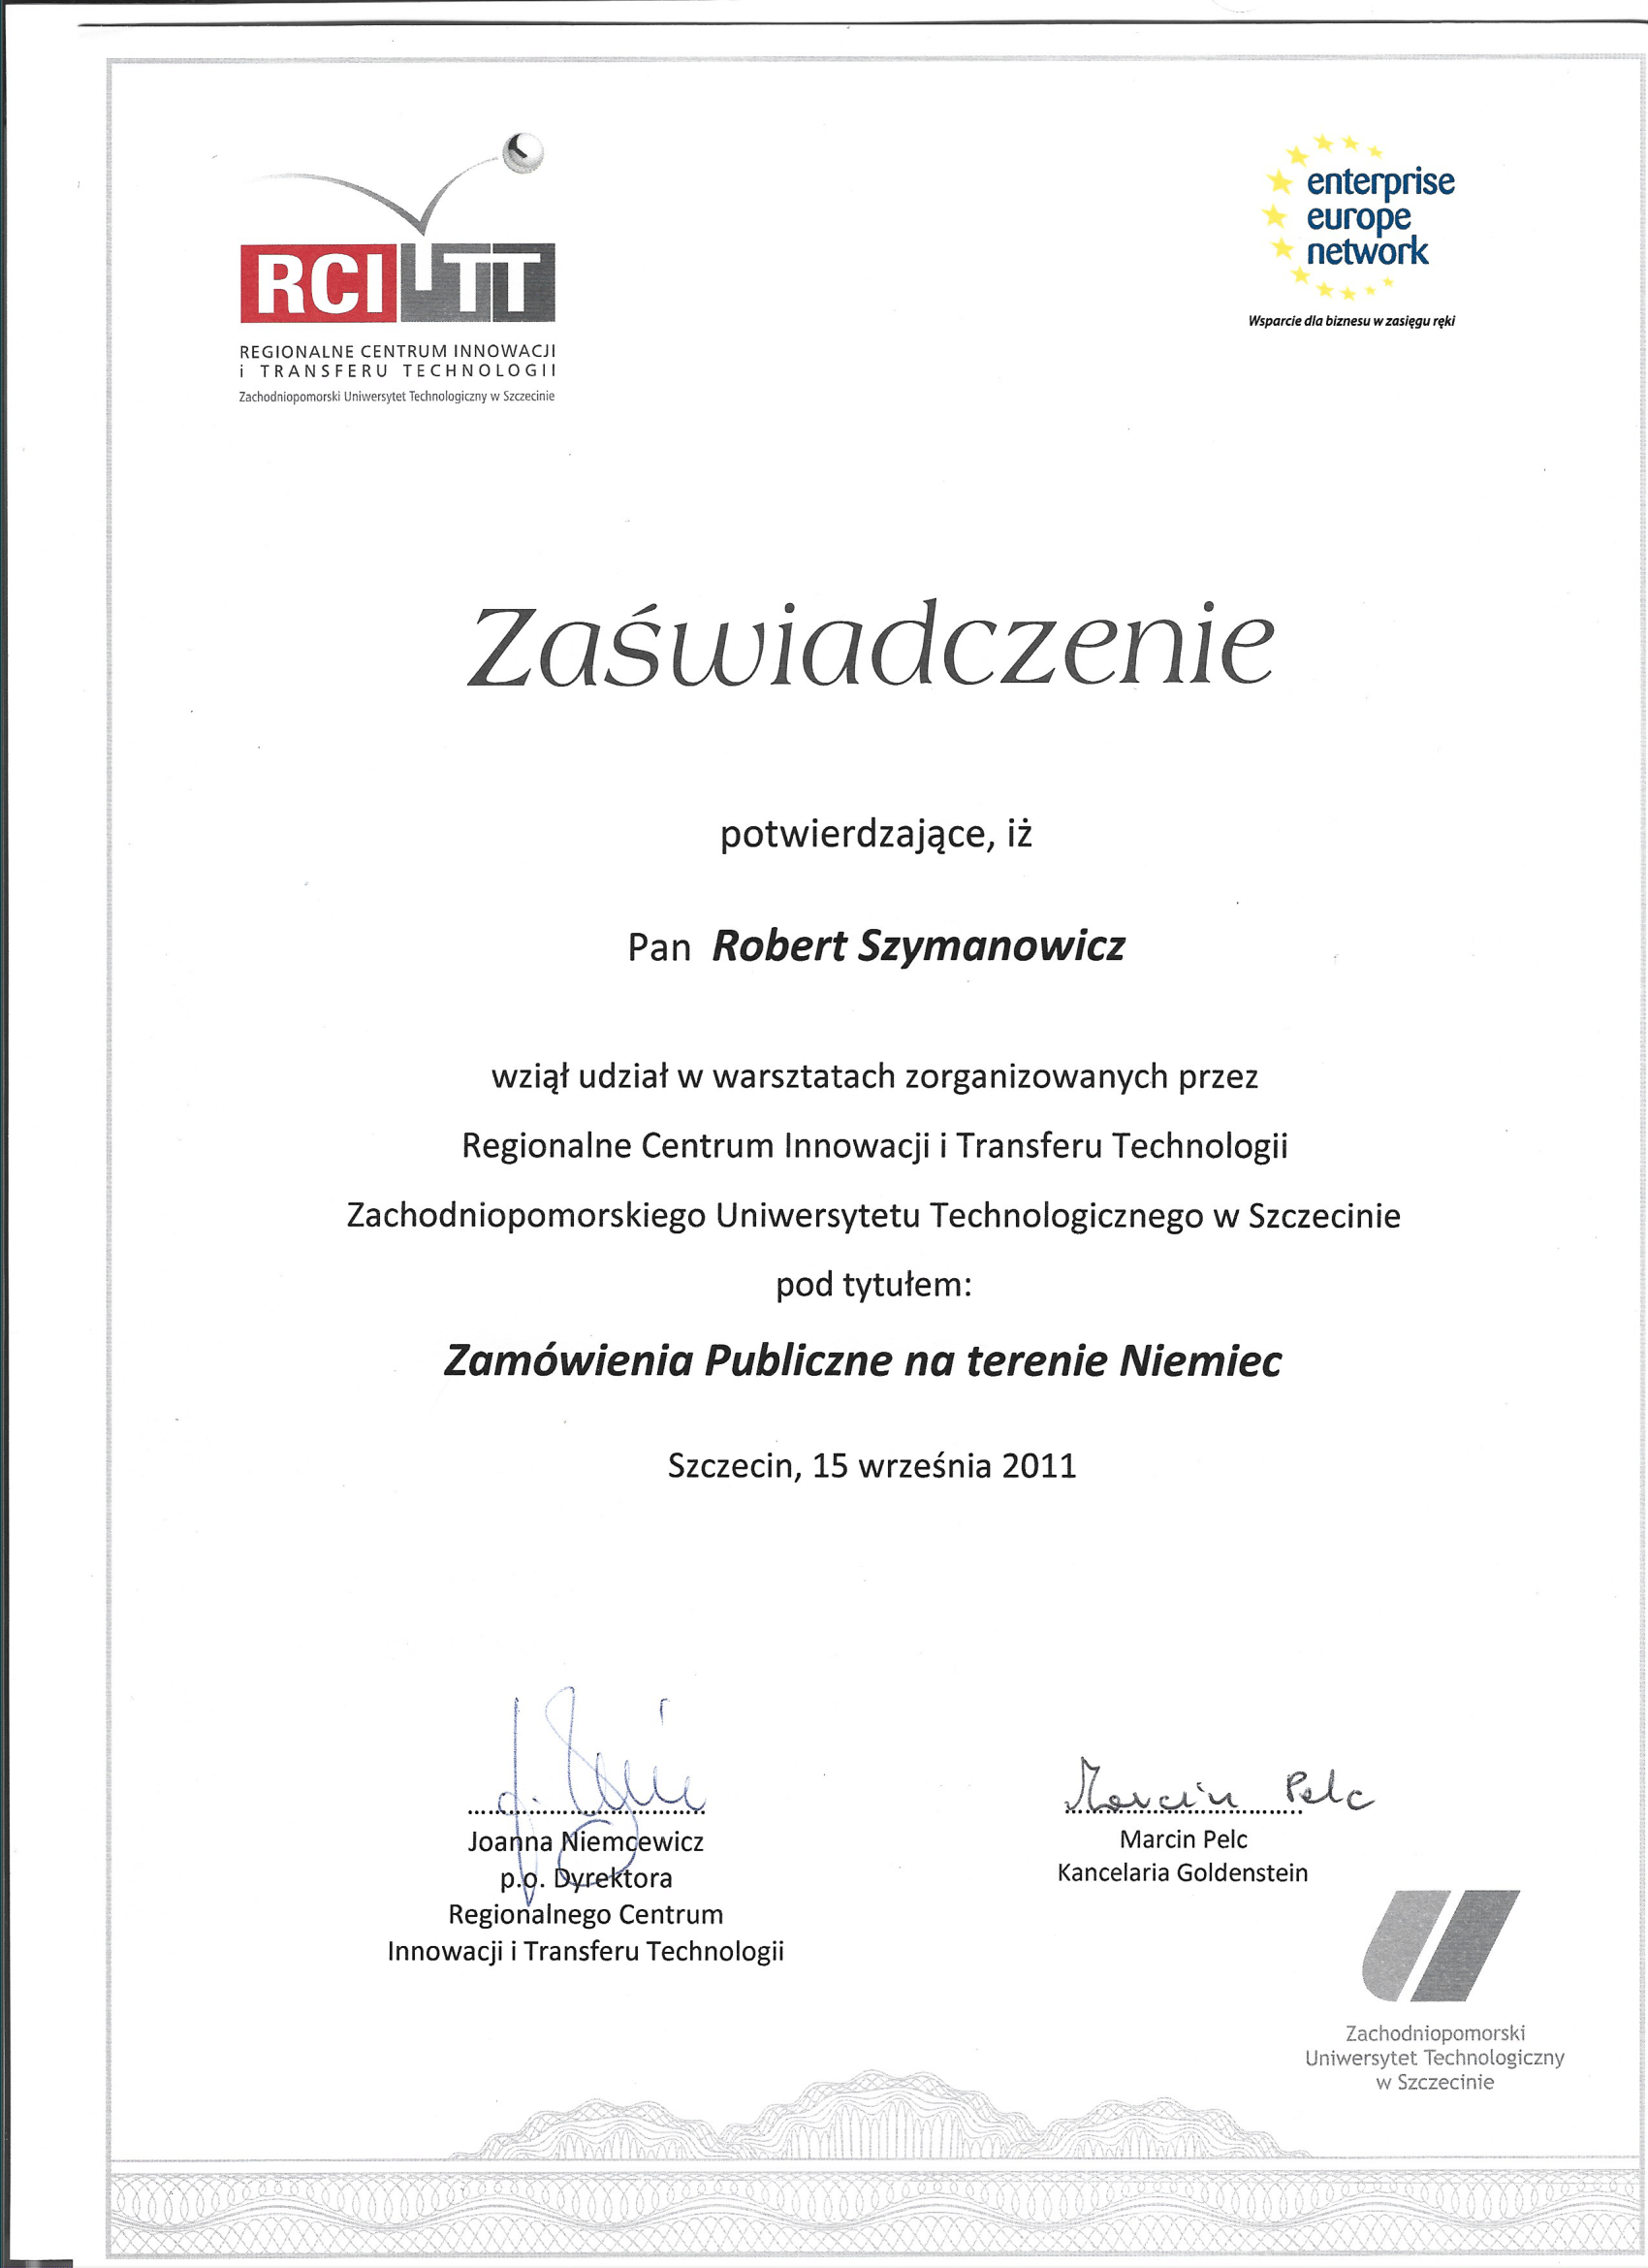 GM PLAST certificate